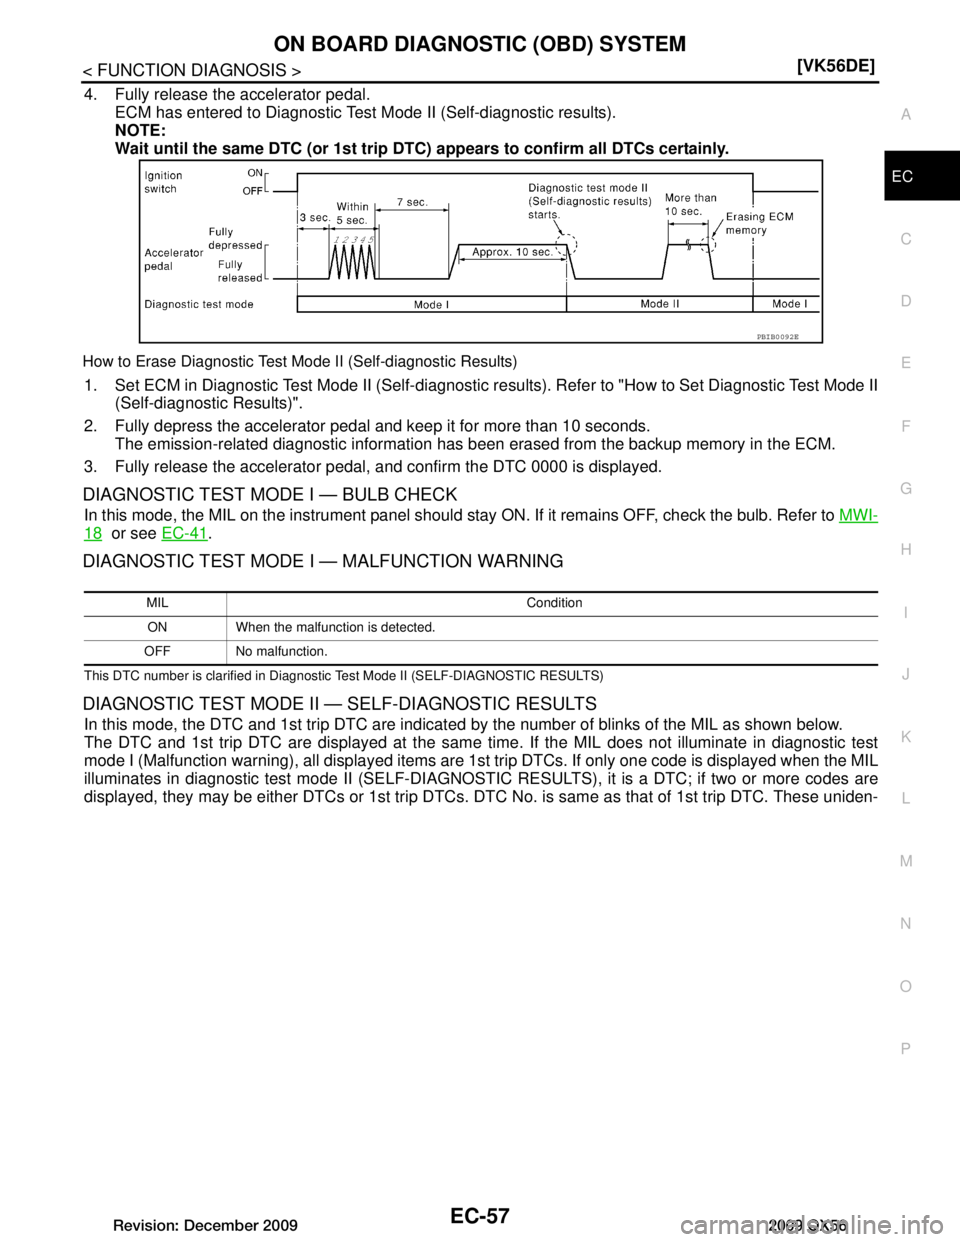 INFINITI QX56 2009  Factory Service Manual 
ON BOARD DIAGNOSTIC (OBD) SYSTEMEC-57
< FUNCTION DIAGNOSIS > [VK56DE]
C
D
E
F
G H
I
J
K L
M A
EC
NP
O
4. Fully release the accelerator pedal.
ECM has entered to Diagnostic Test Mode II (Self-diagnost